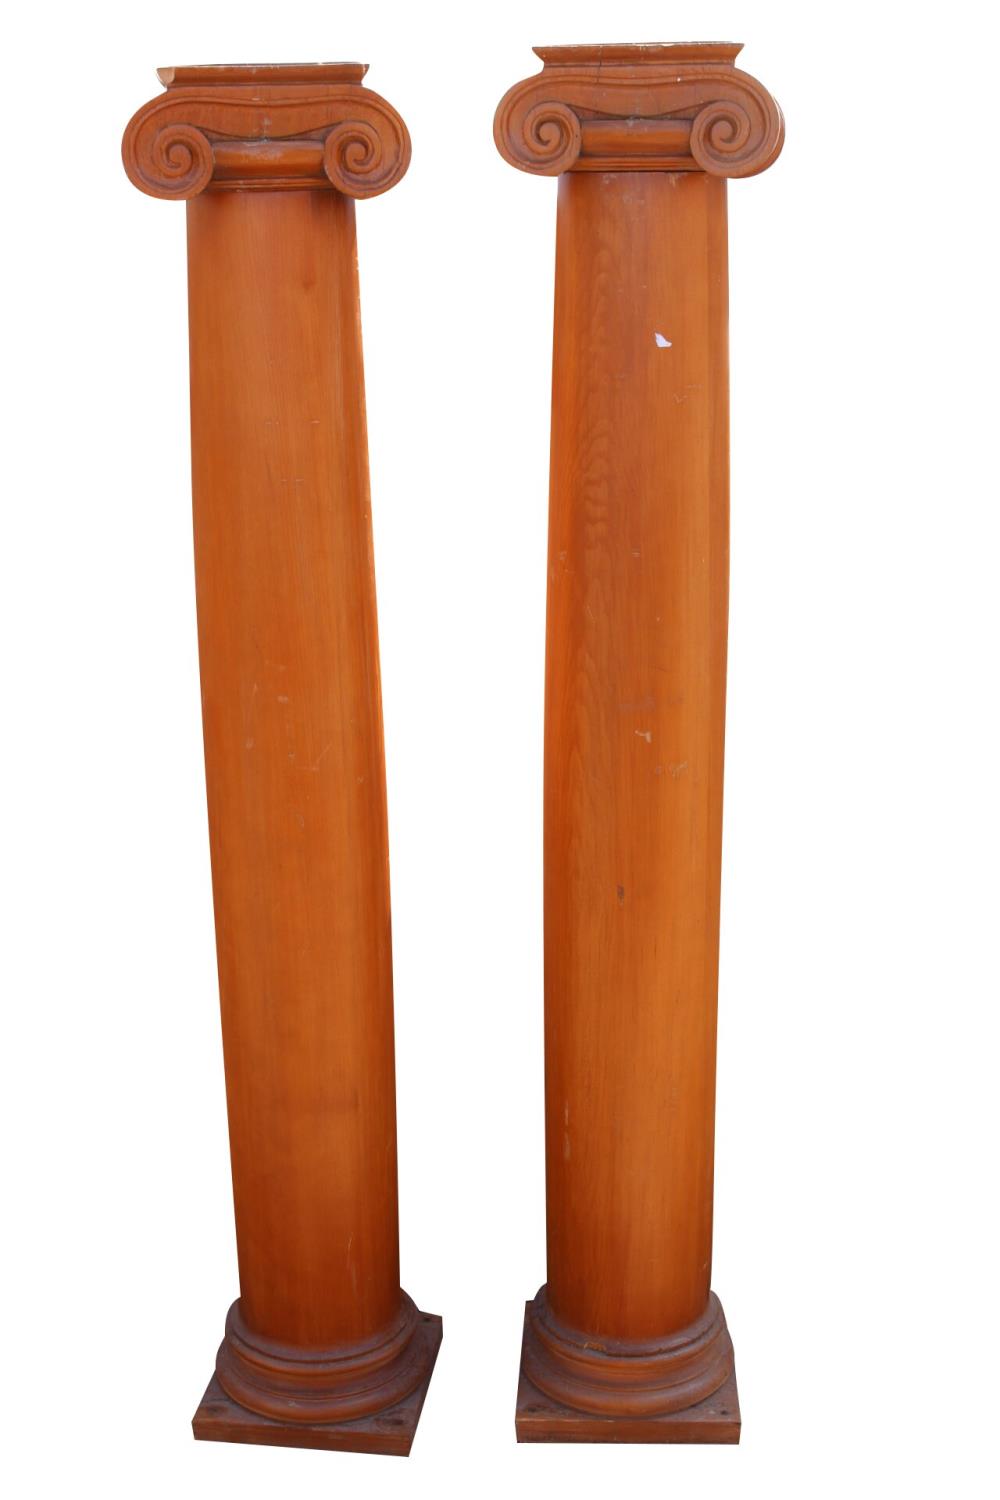 Pair of 19th C. pine pillars.